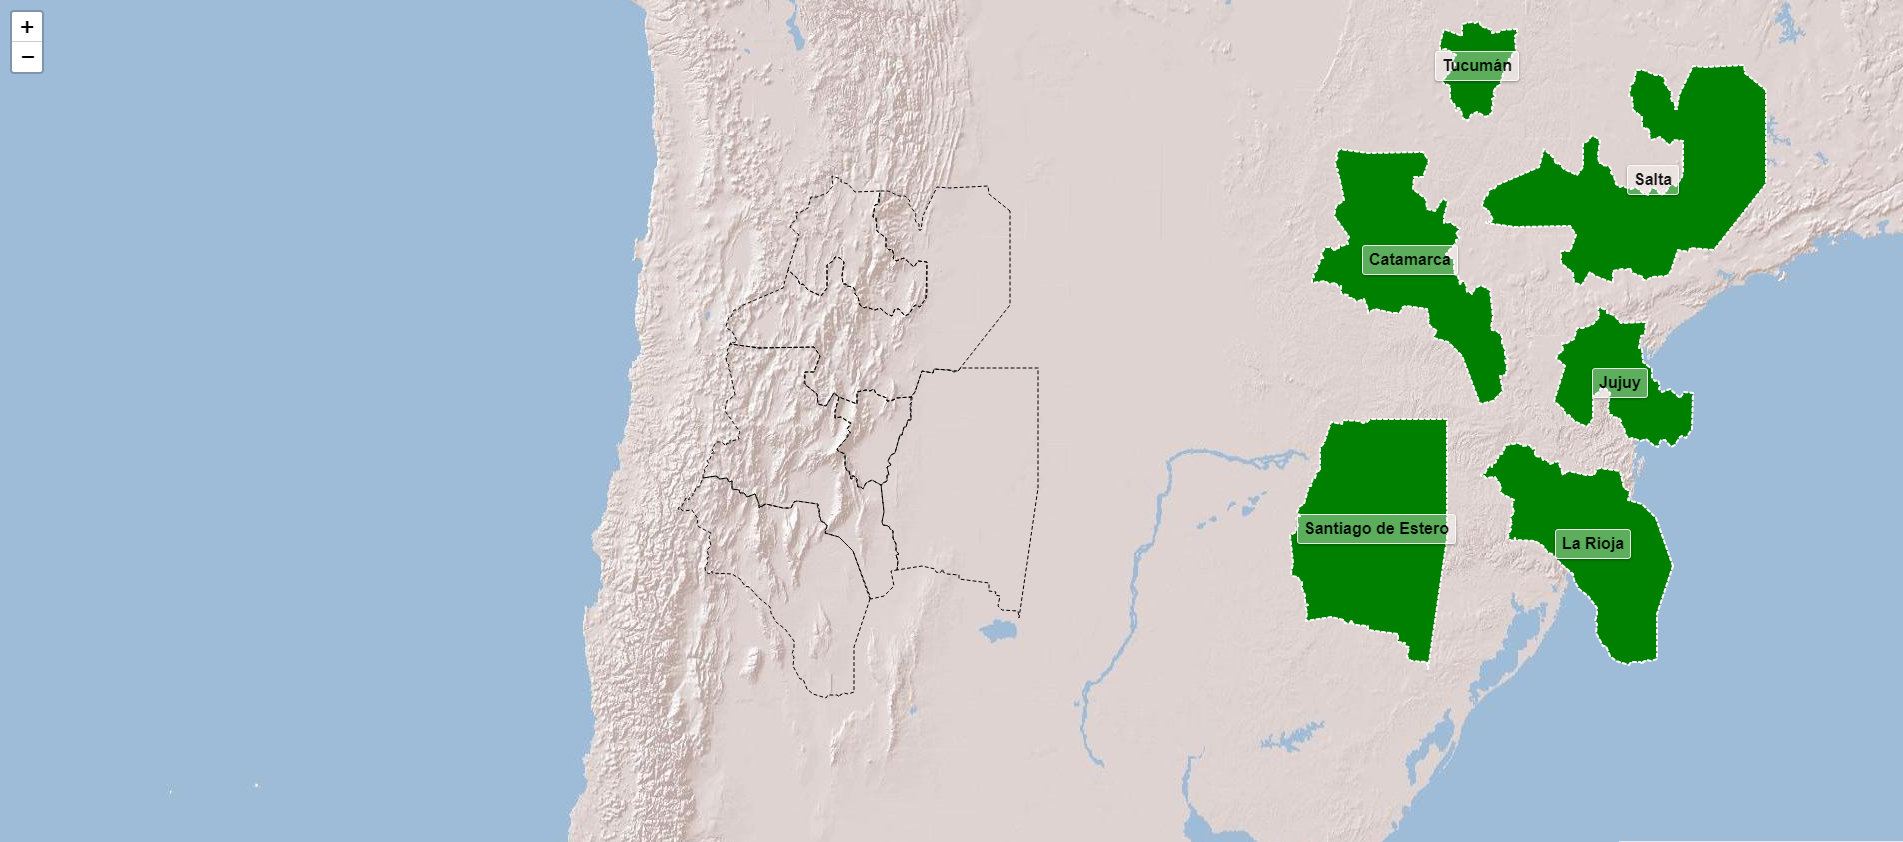 Provinces of the region northwerstern of Argentina